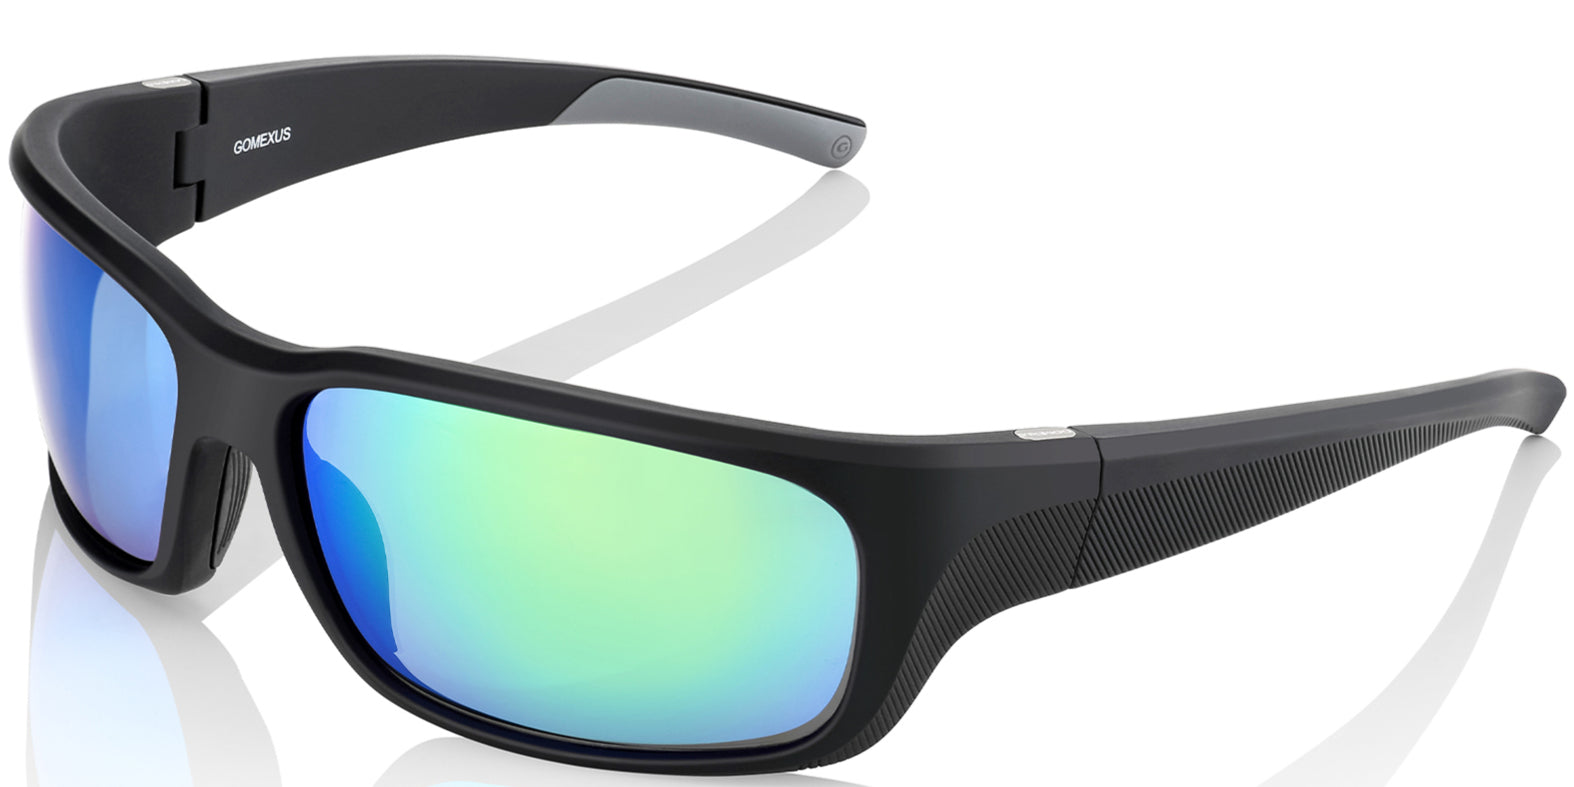 Clarity as Glass: Gomexus F15 Fishing Sunglasses